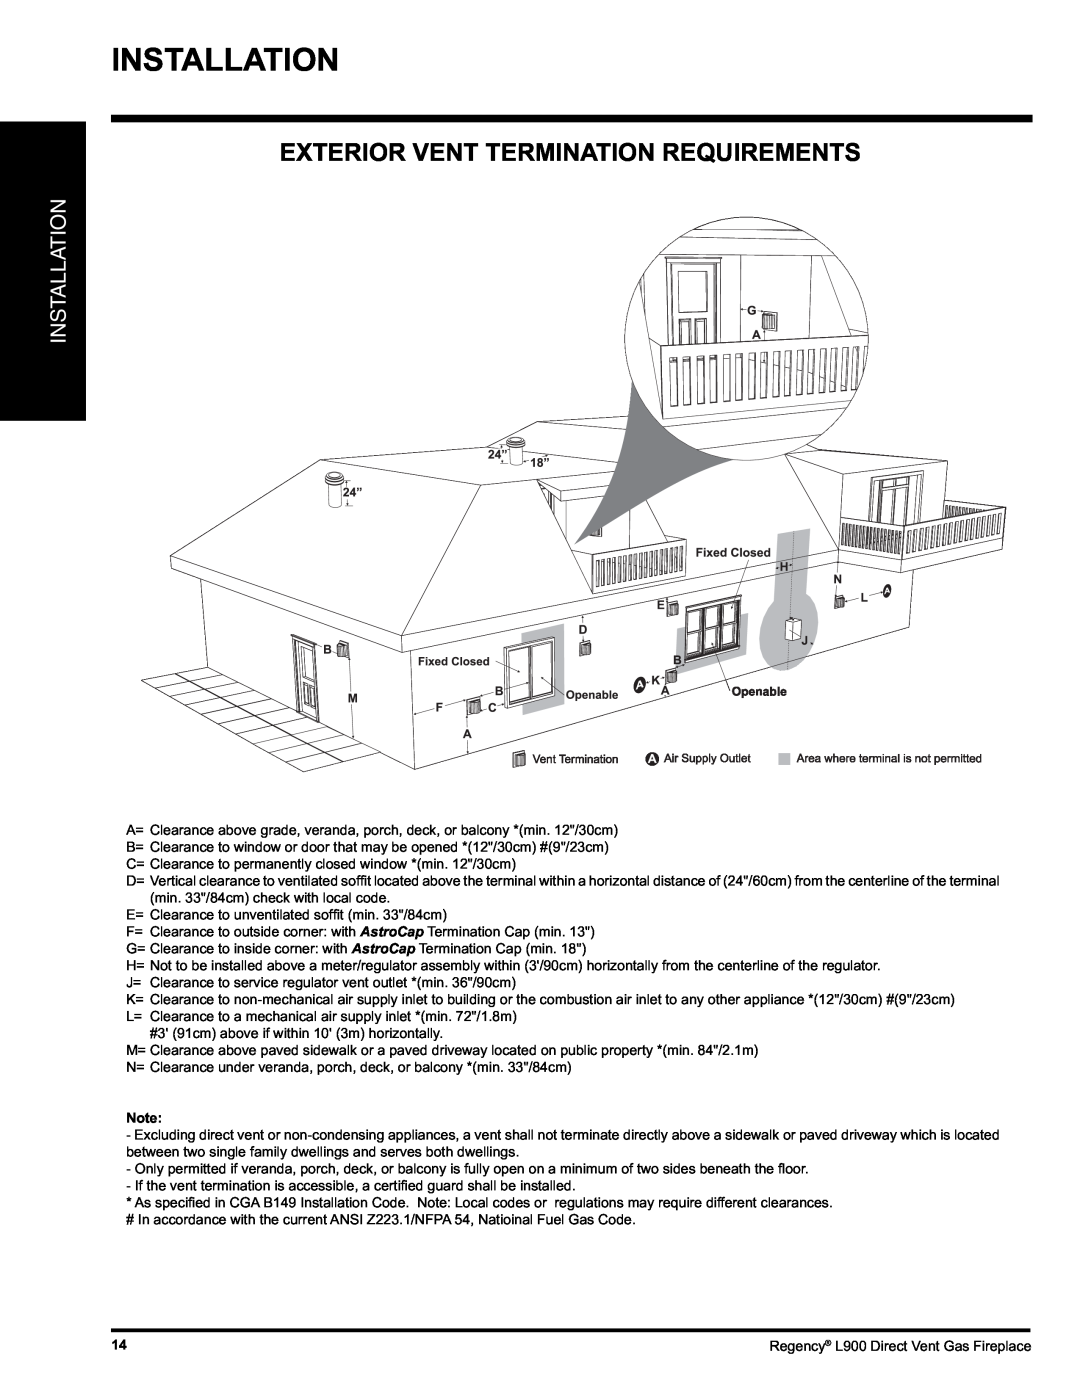 Regency L900-LP, L900-NG installation manual Installation, Exterior Vent Termination Requirements 